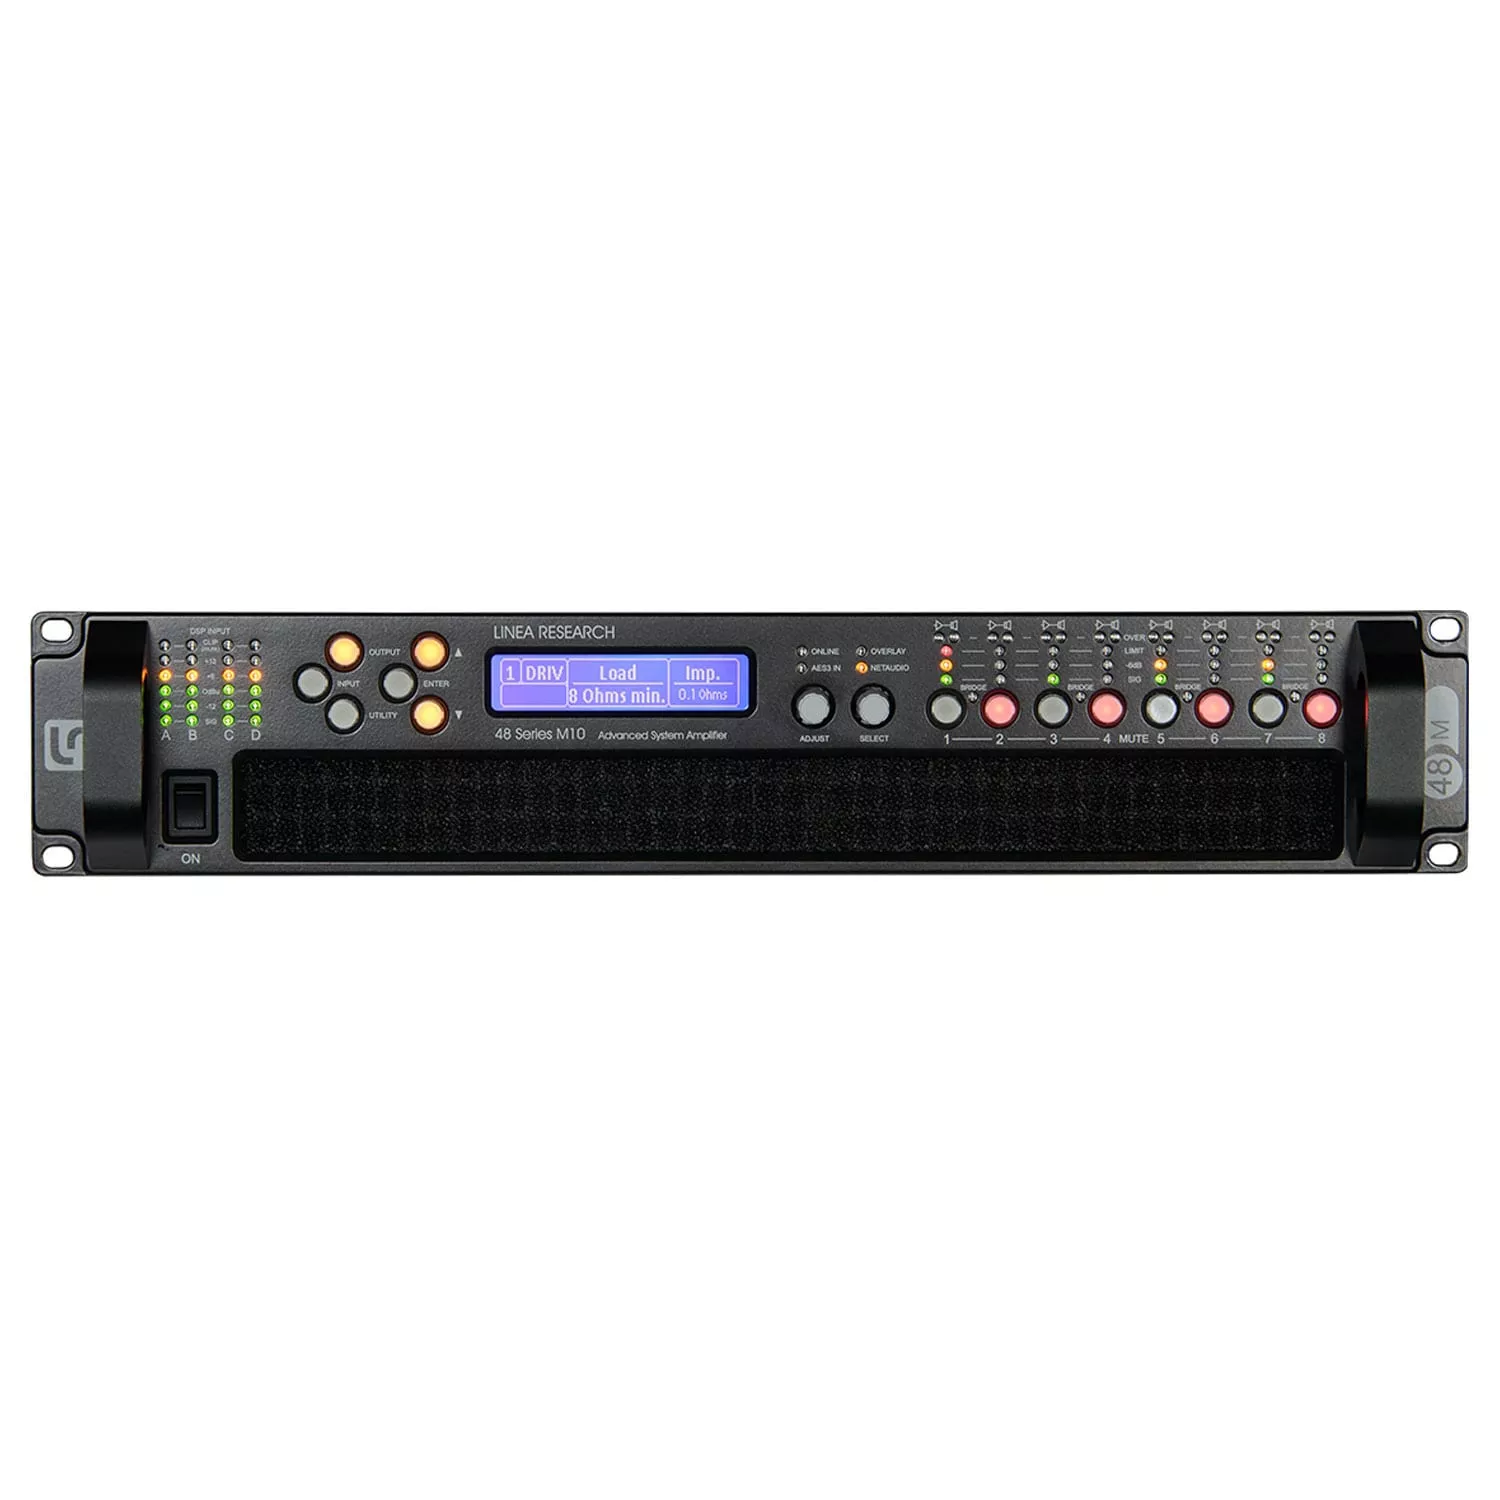 Amplificator Linea Research 44M06, [],audioclub.ro